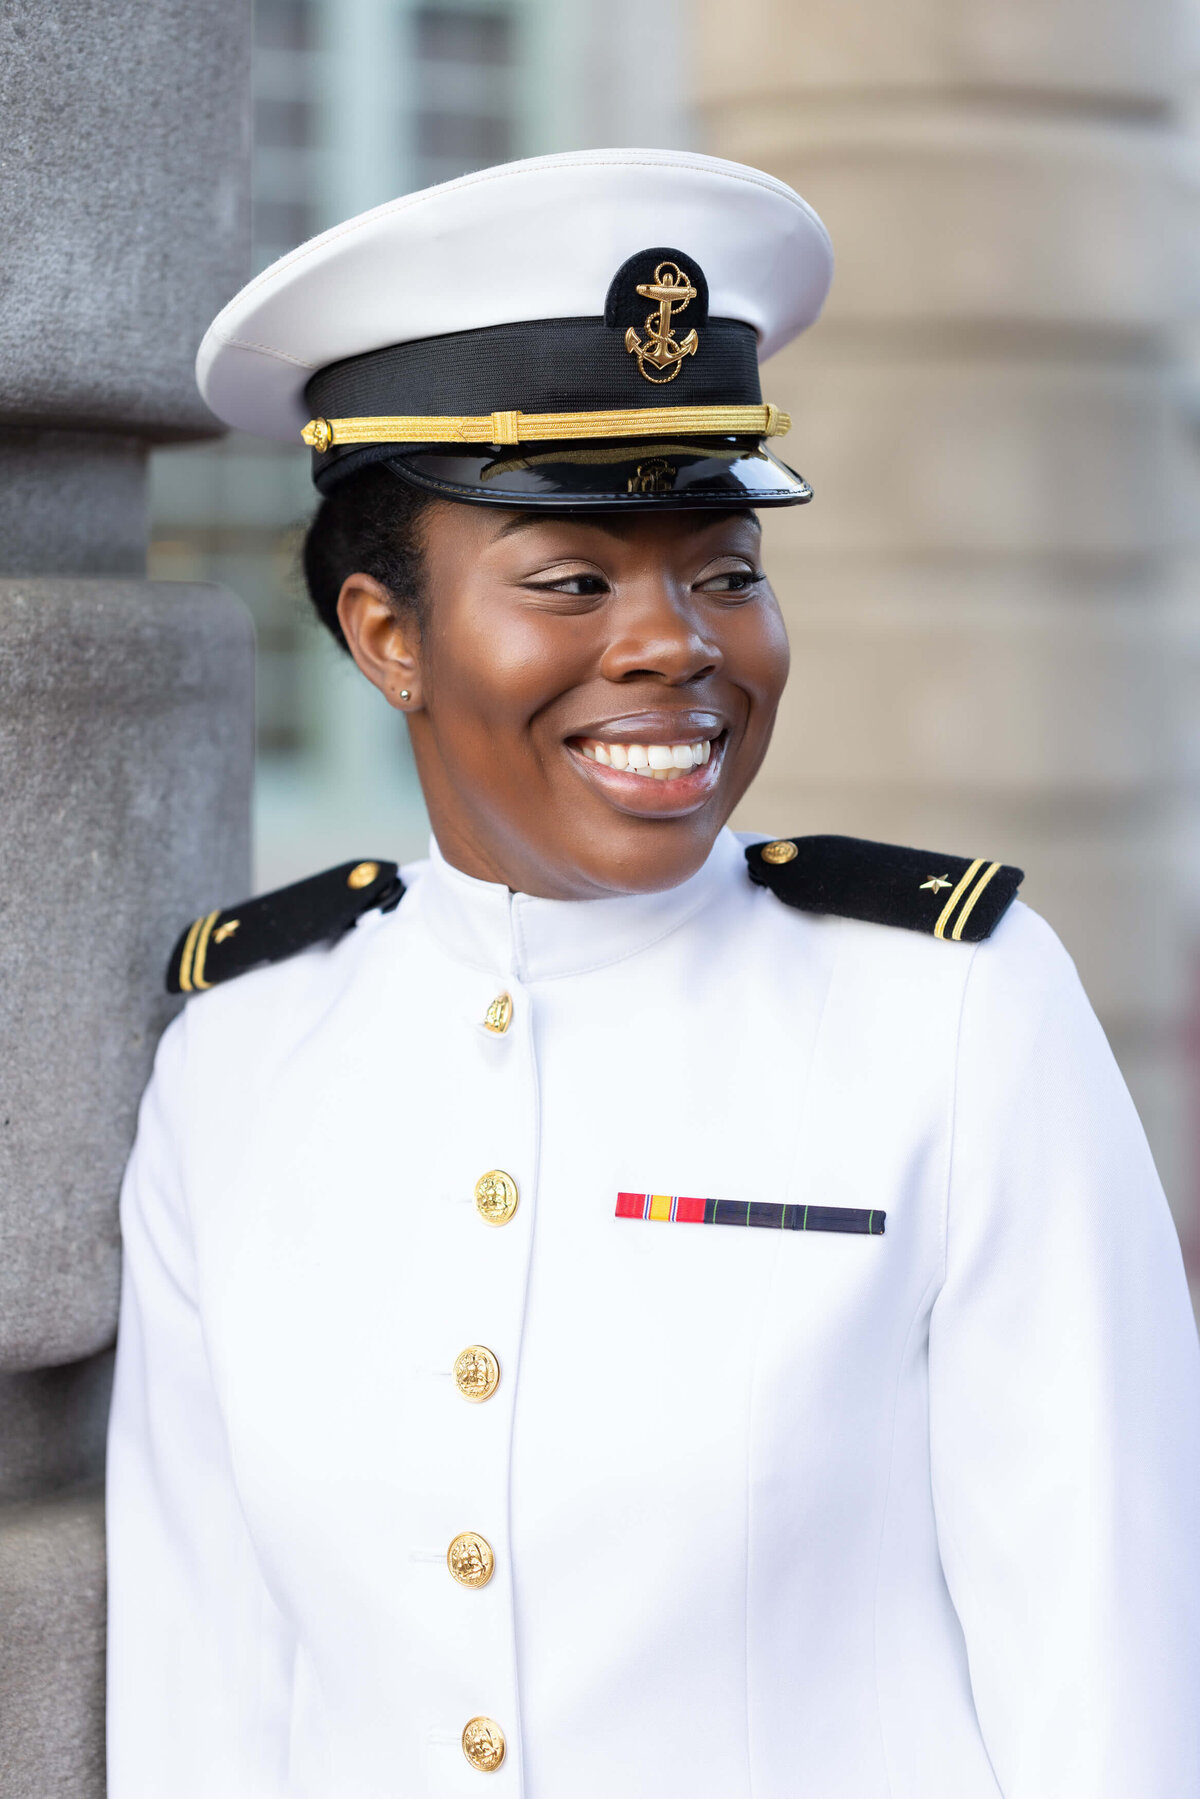 Navy officer in white uniform.